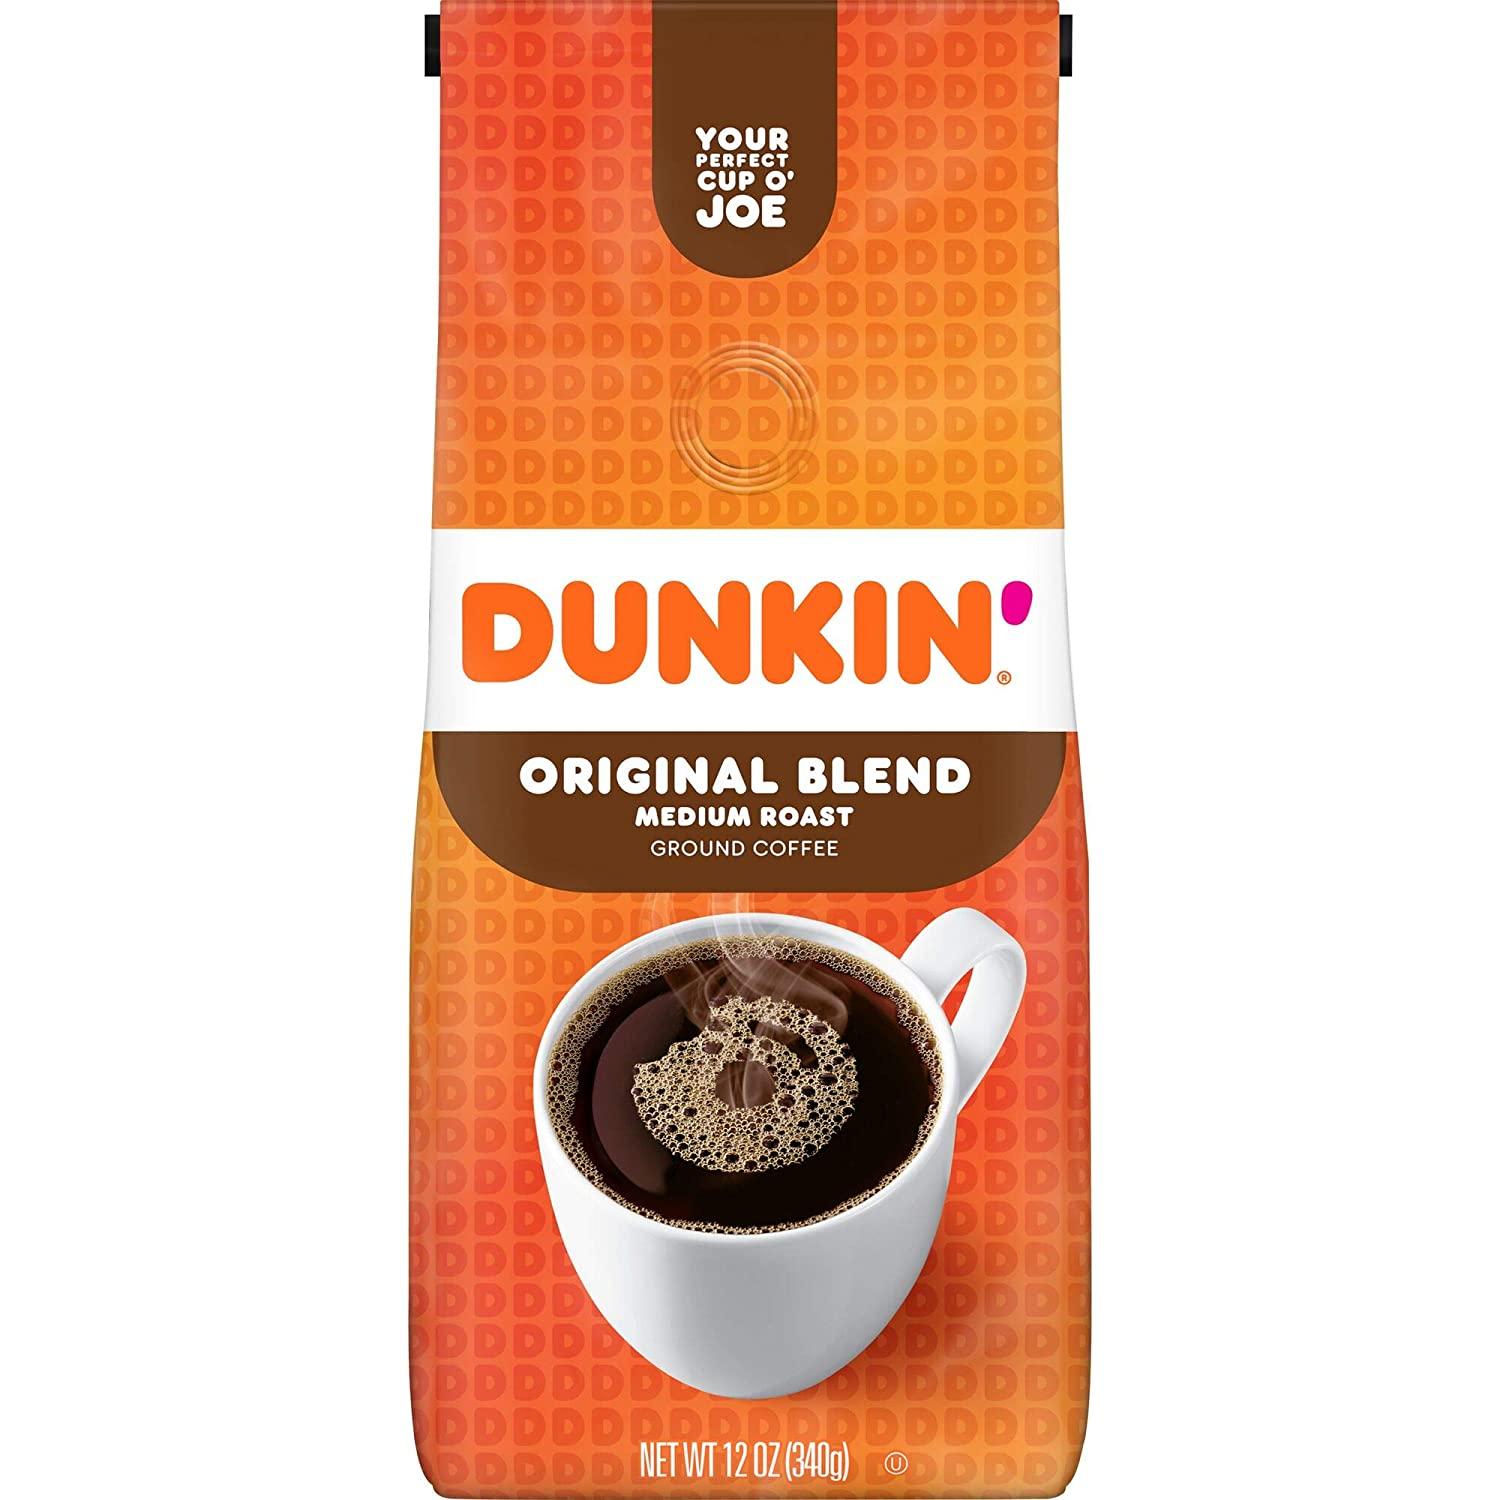 Dunkin Original Blend Medium Roast Ground Coffee for $4.74 Shipped